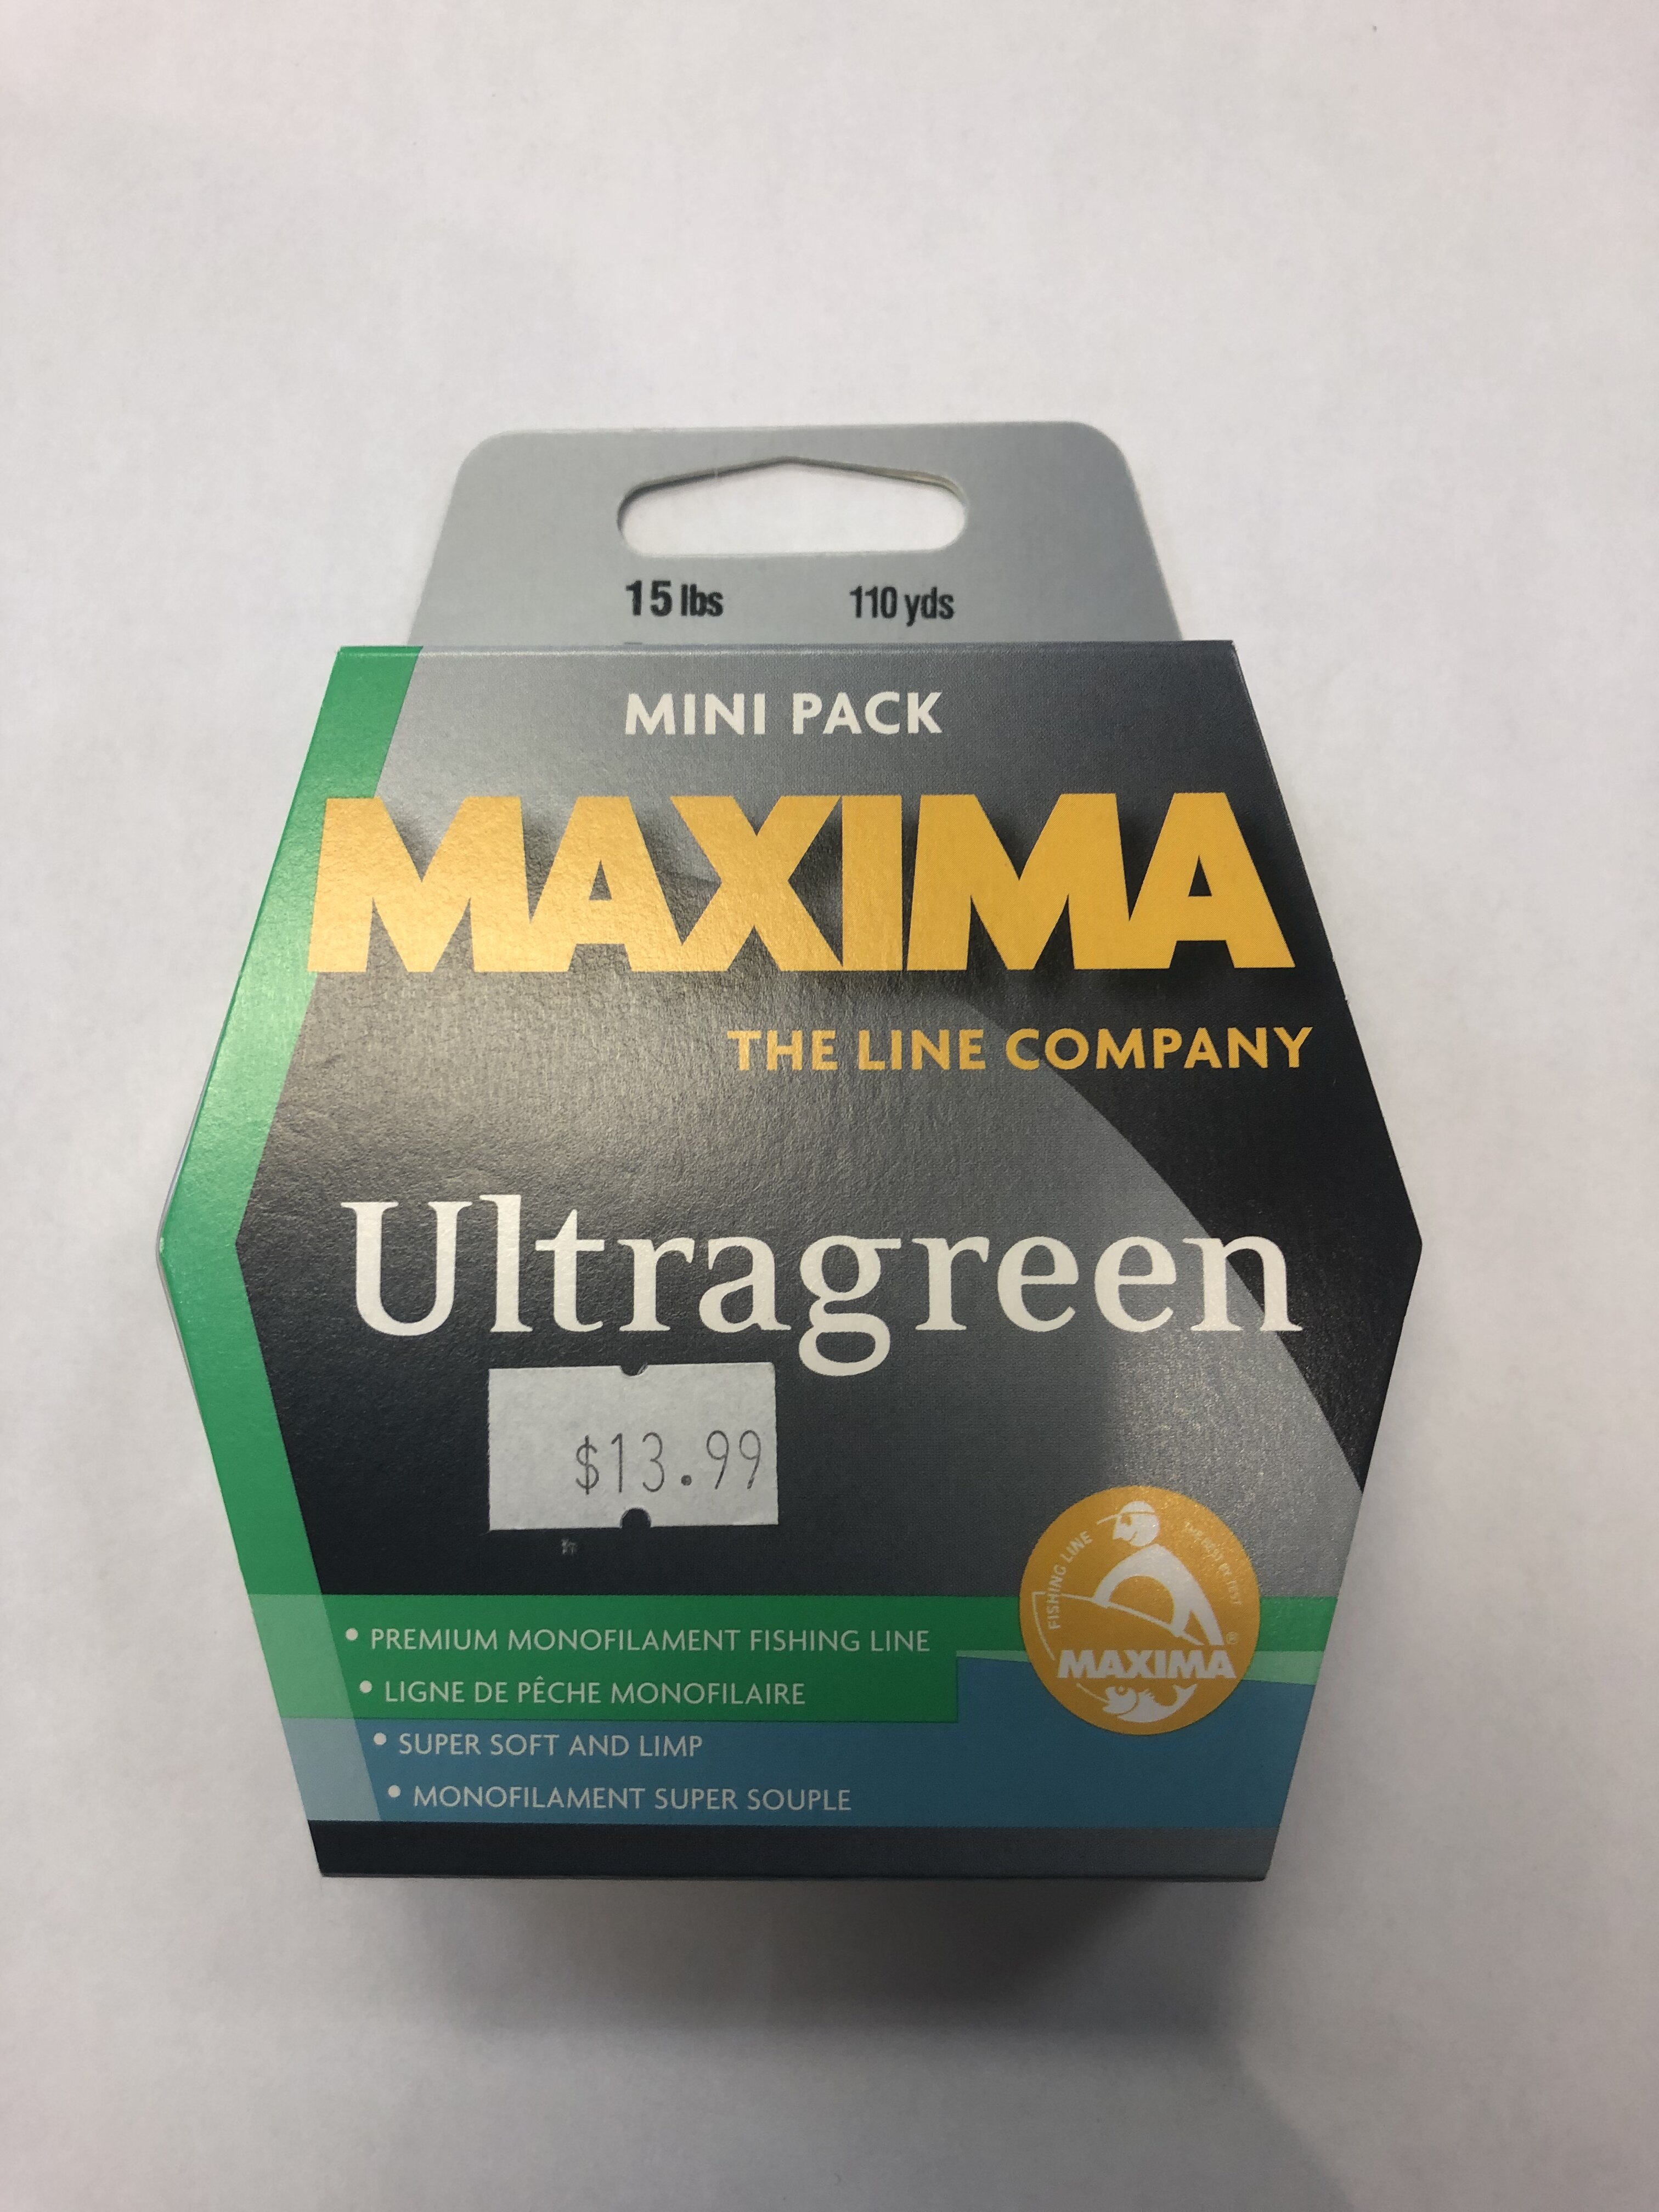 Maxima Ultragreen Line, Fishing Tackle